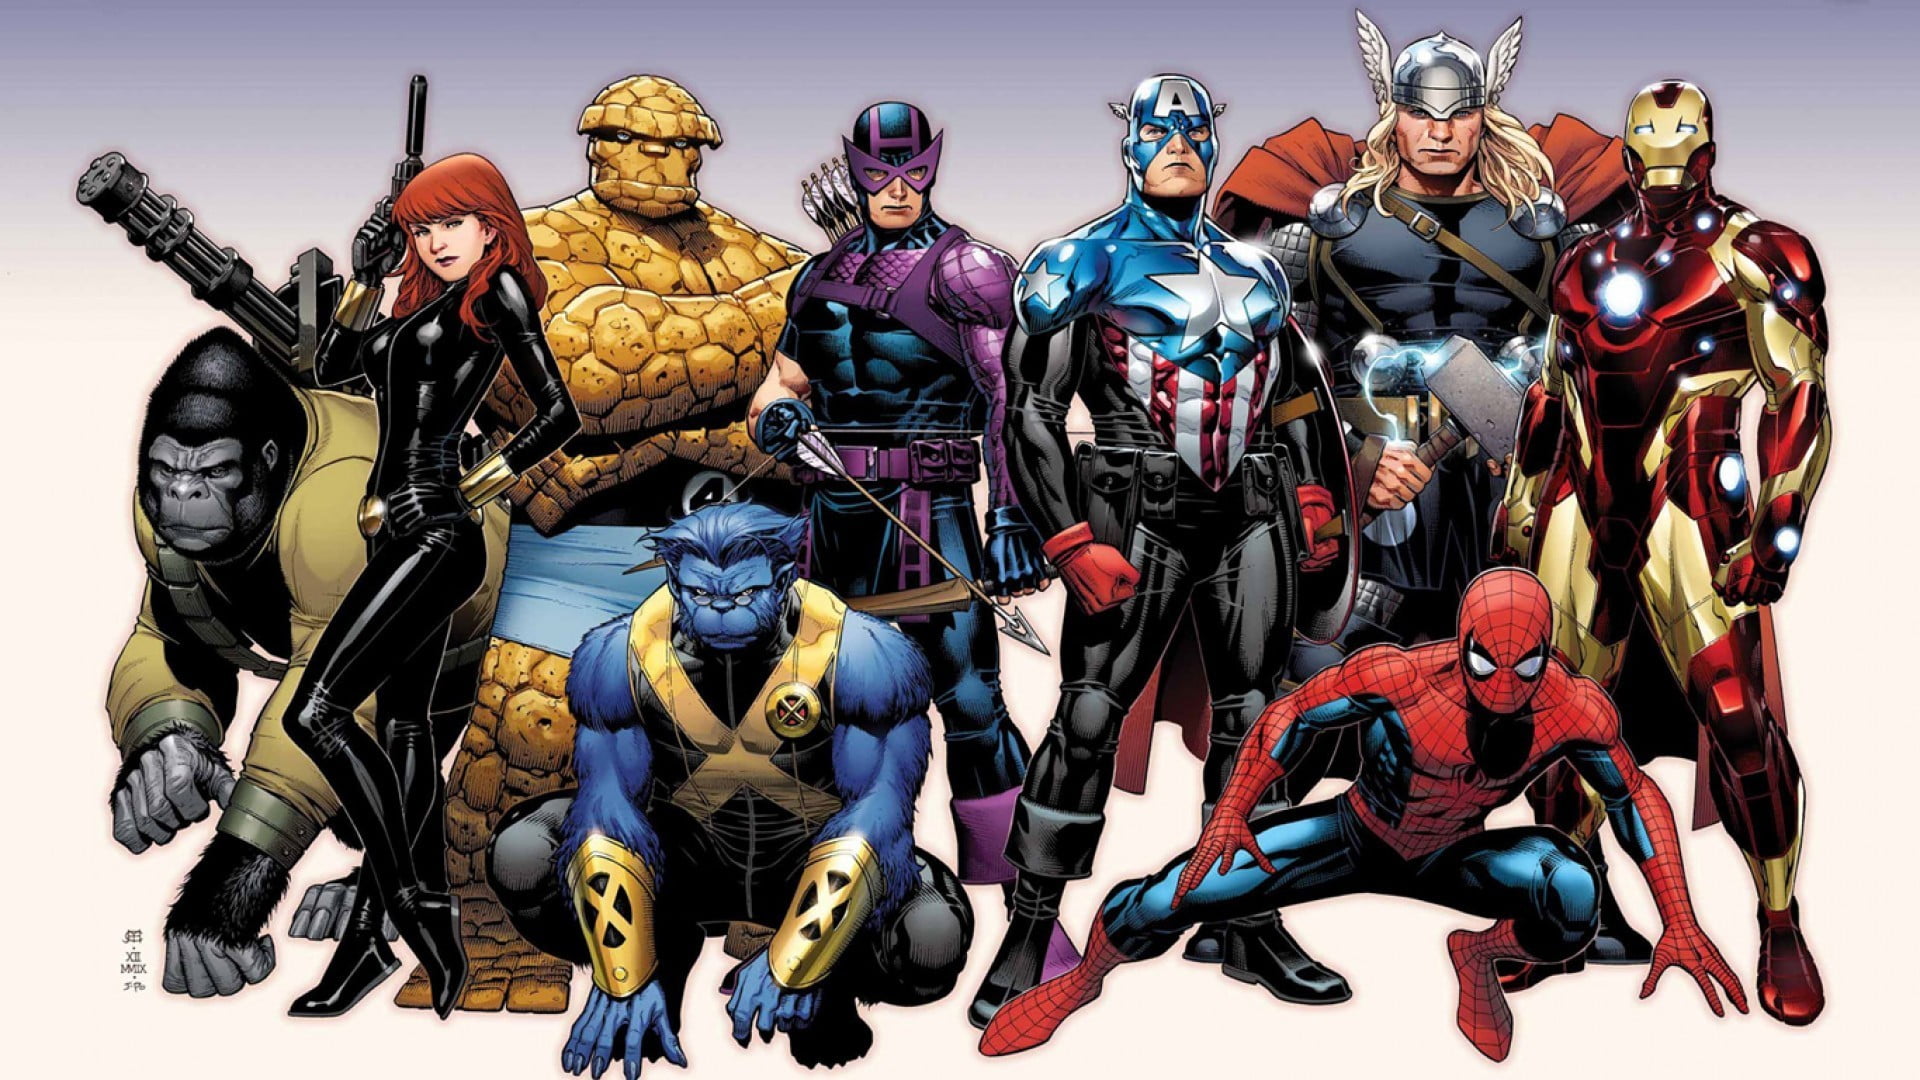 Marvel Superheroes wallpaper, comics, Spider-Man, Iron Man, Captain America